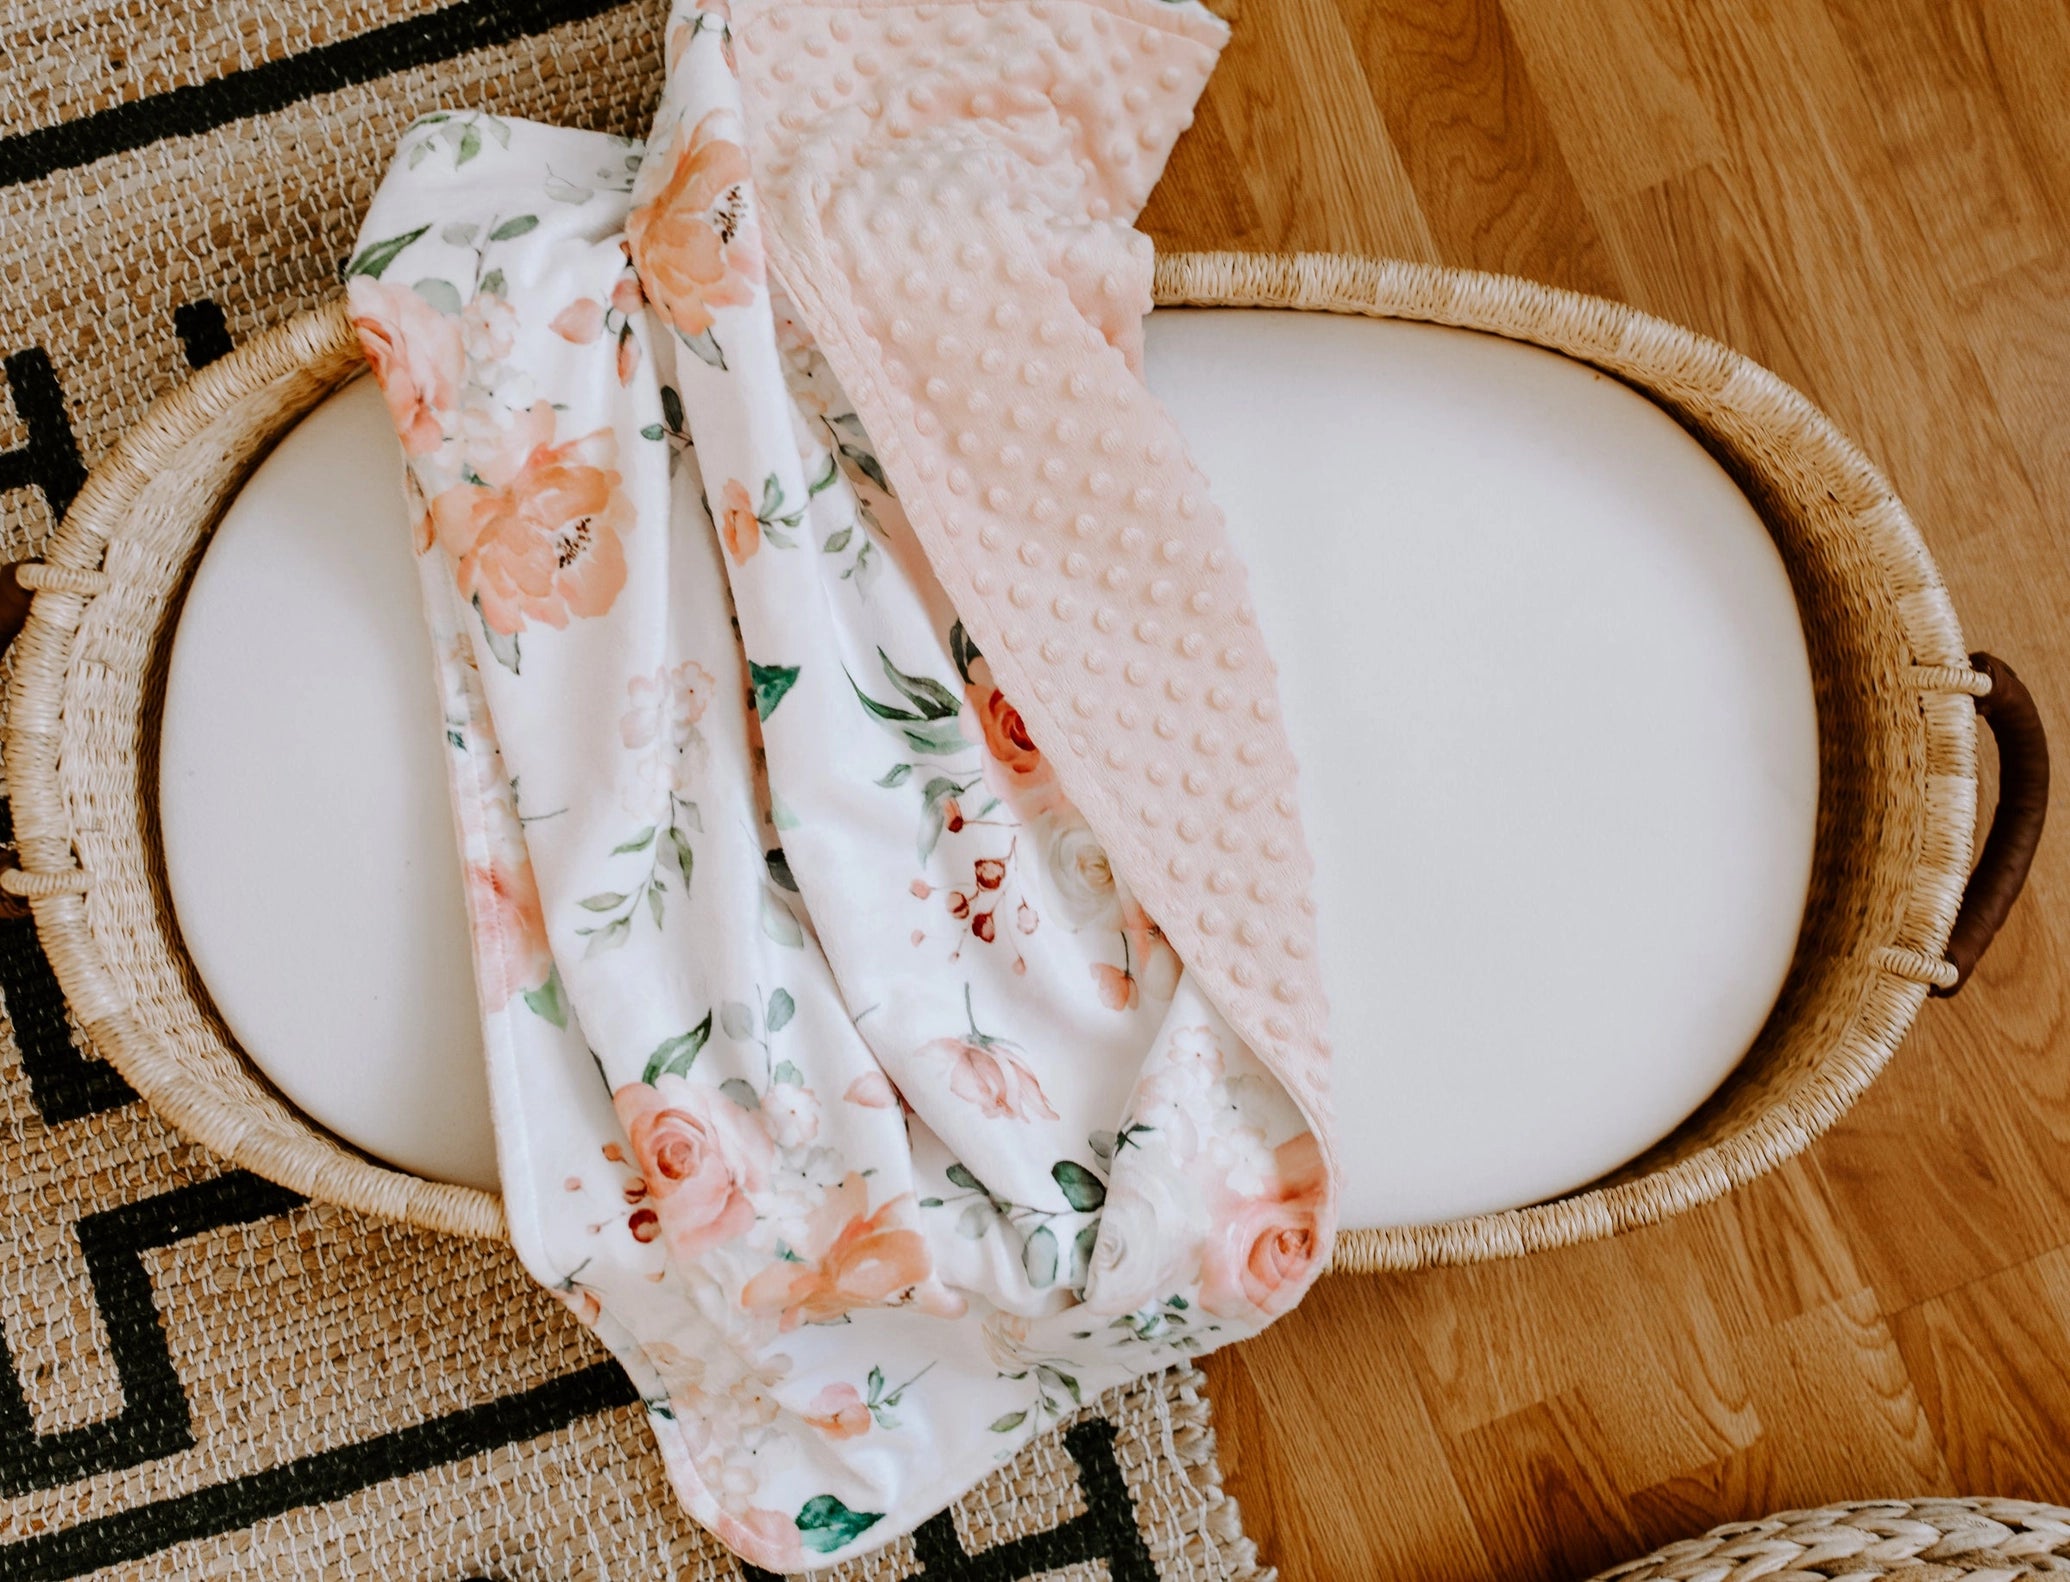 Honey Lemonade - Premium Baby & Toddler Blanket - Peach Floral